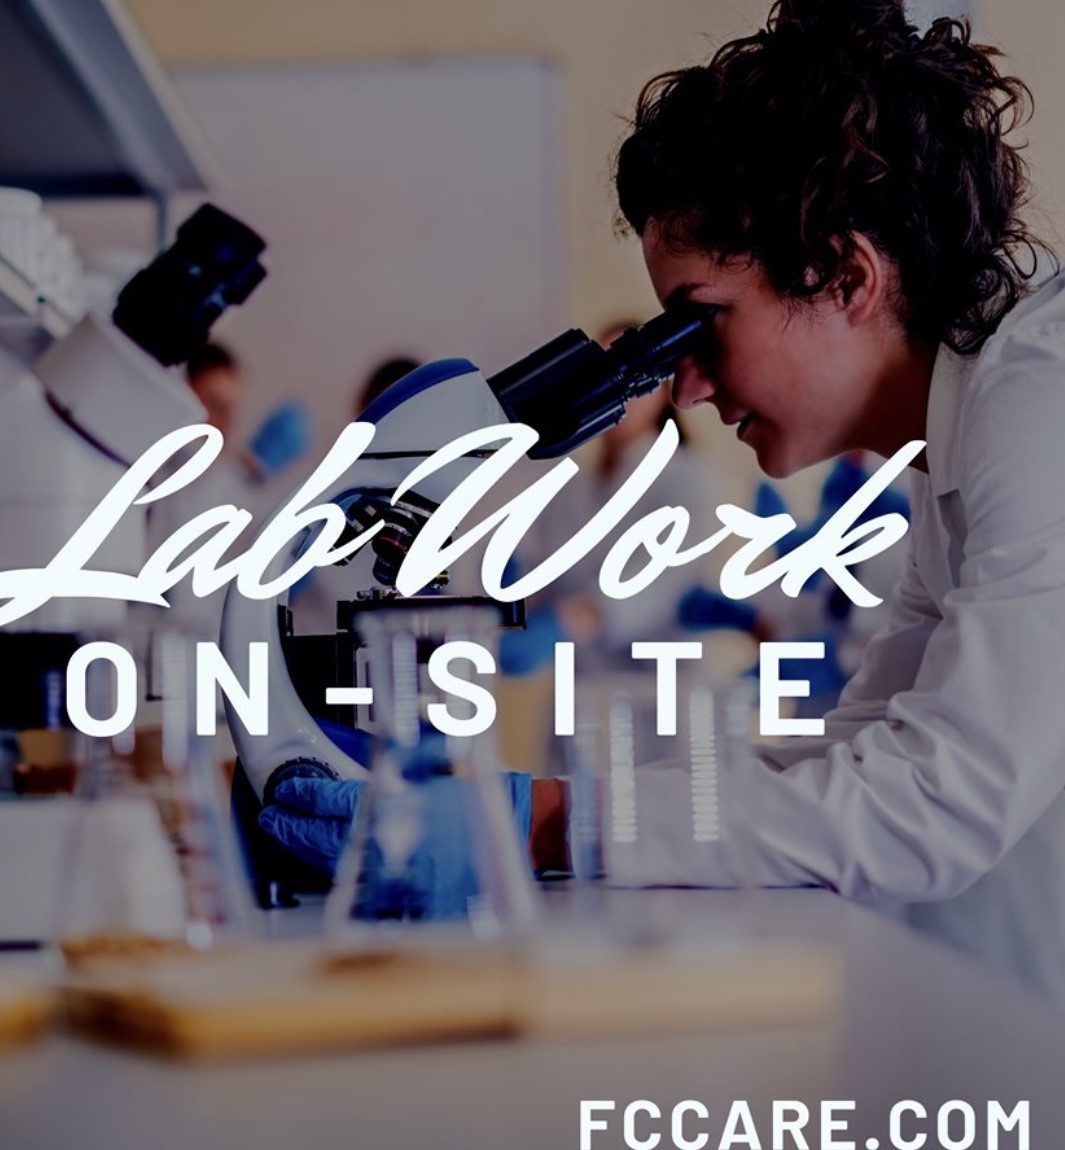 Lab Work On-site